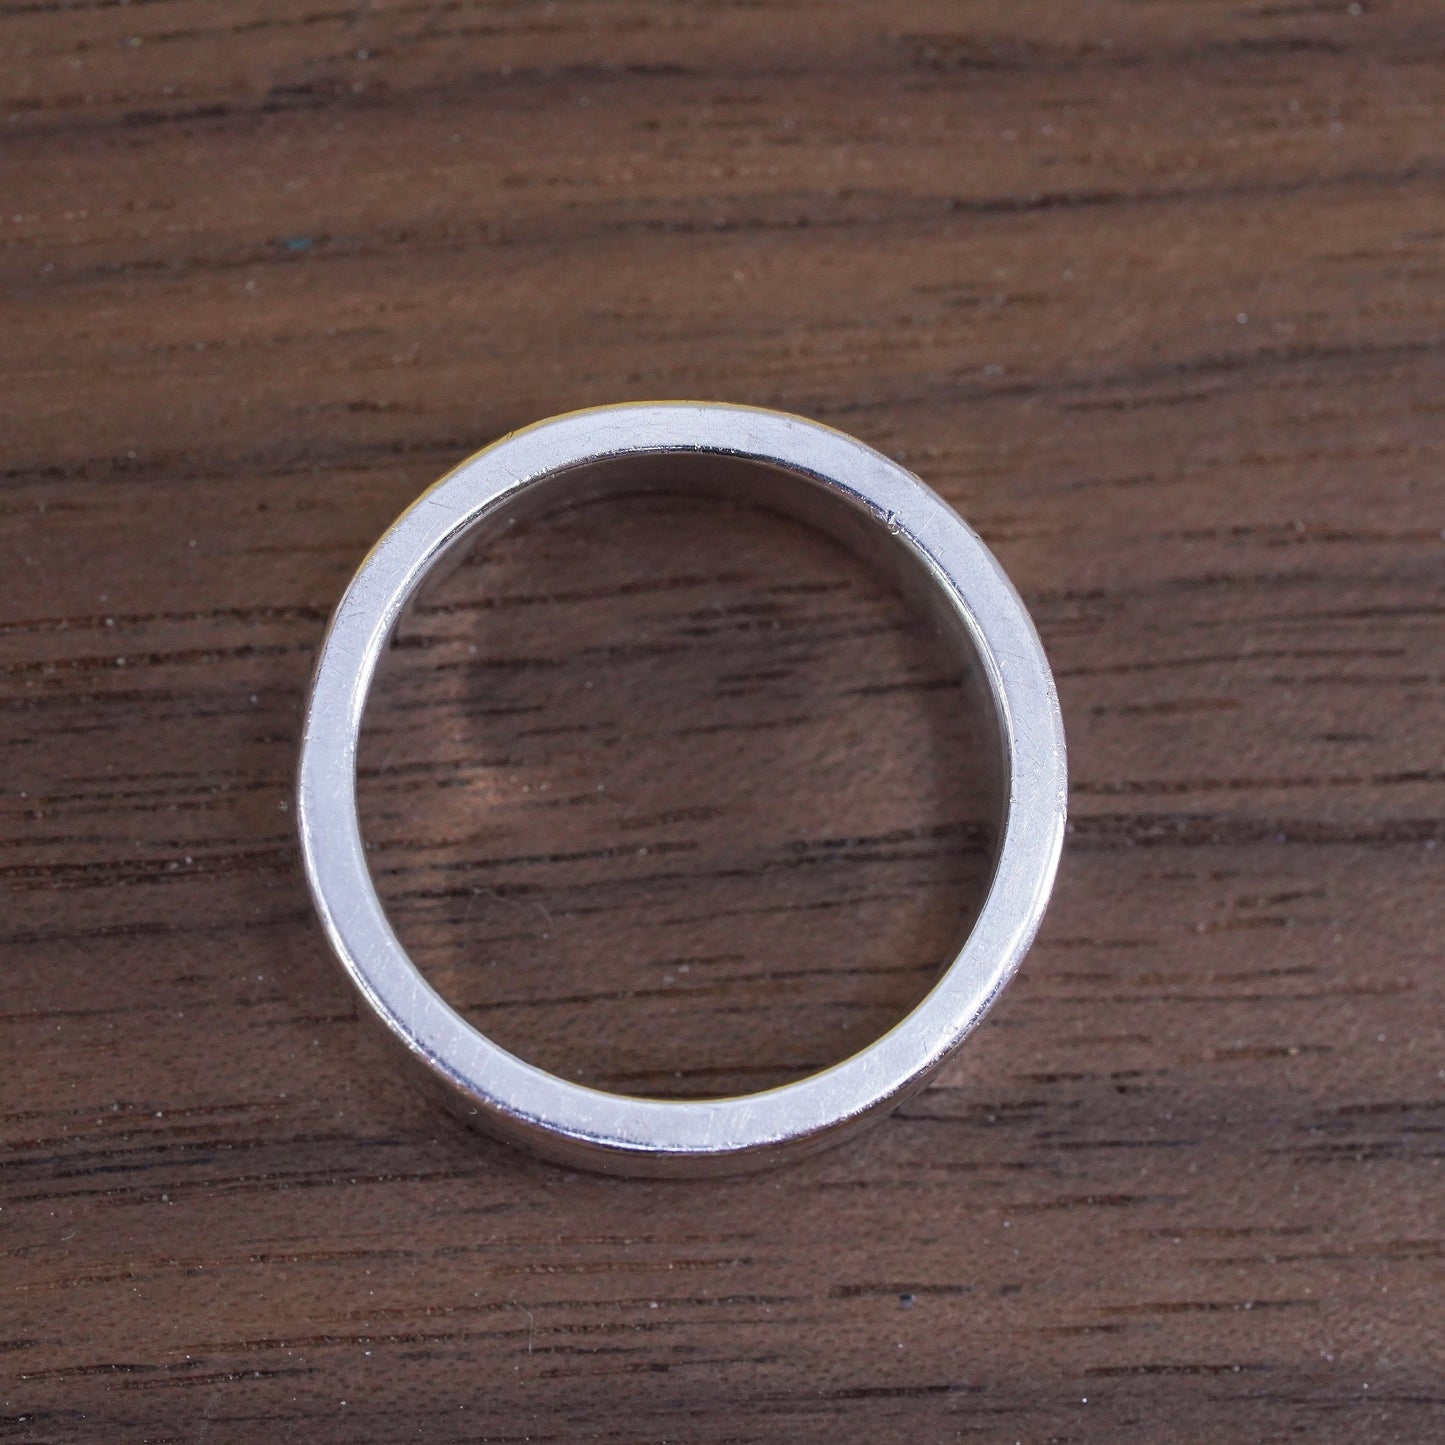 Size 7, vintage Sterling silver handmade ring, hammered 925 band